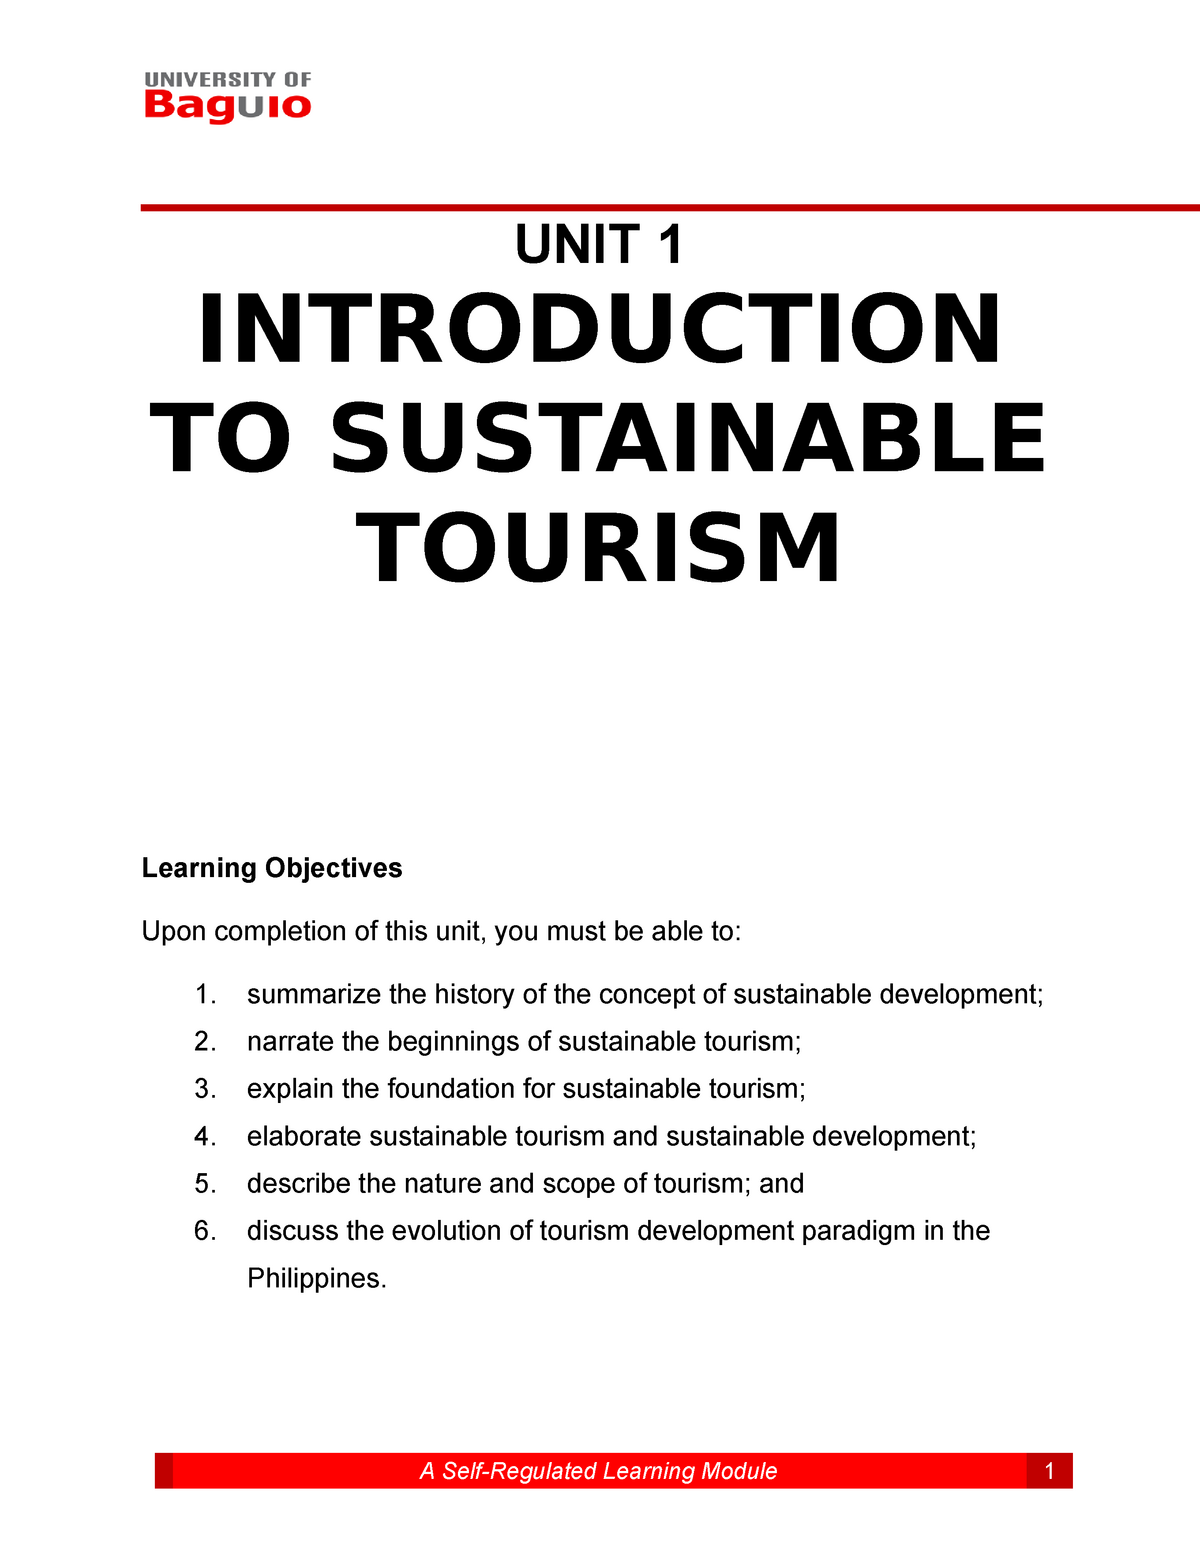 essay sustainable tourism